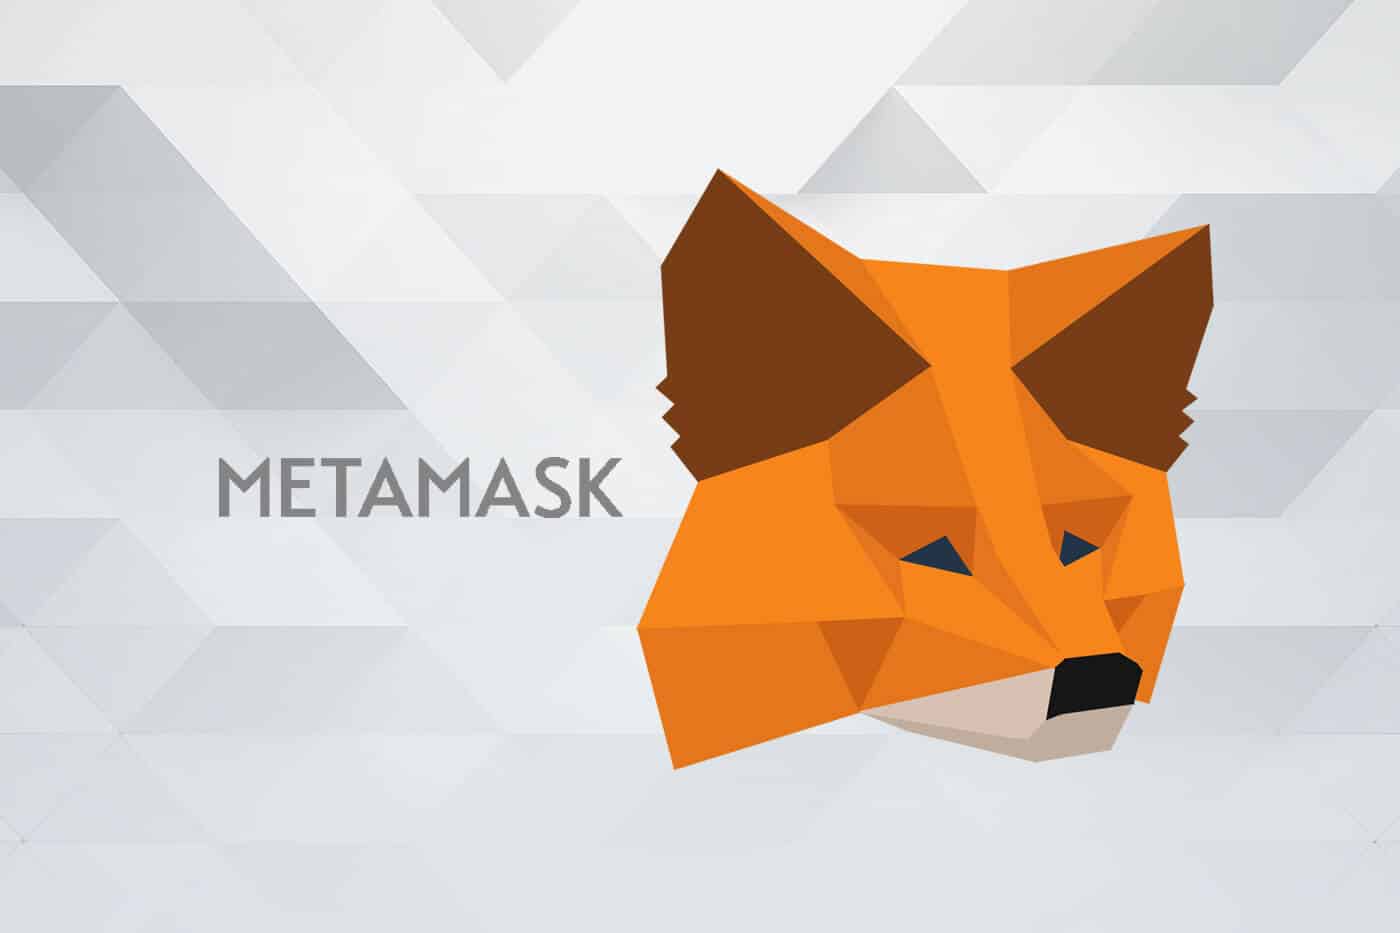 Ethereum’s MetaMask Reaches 1 Million User Milestone